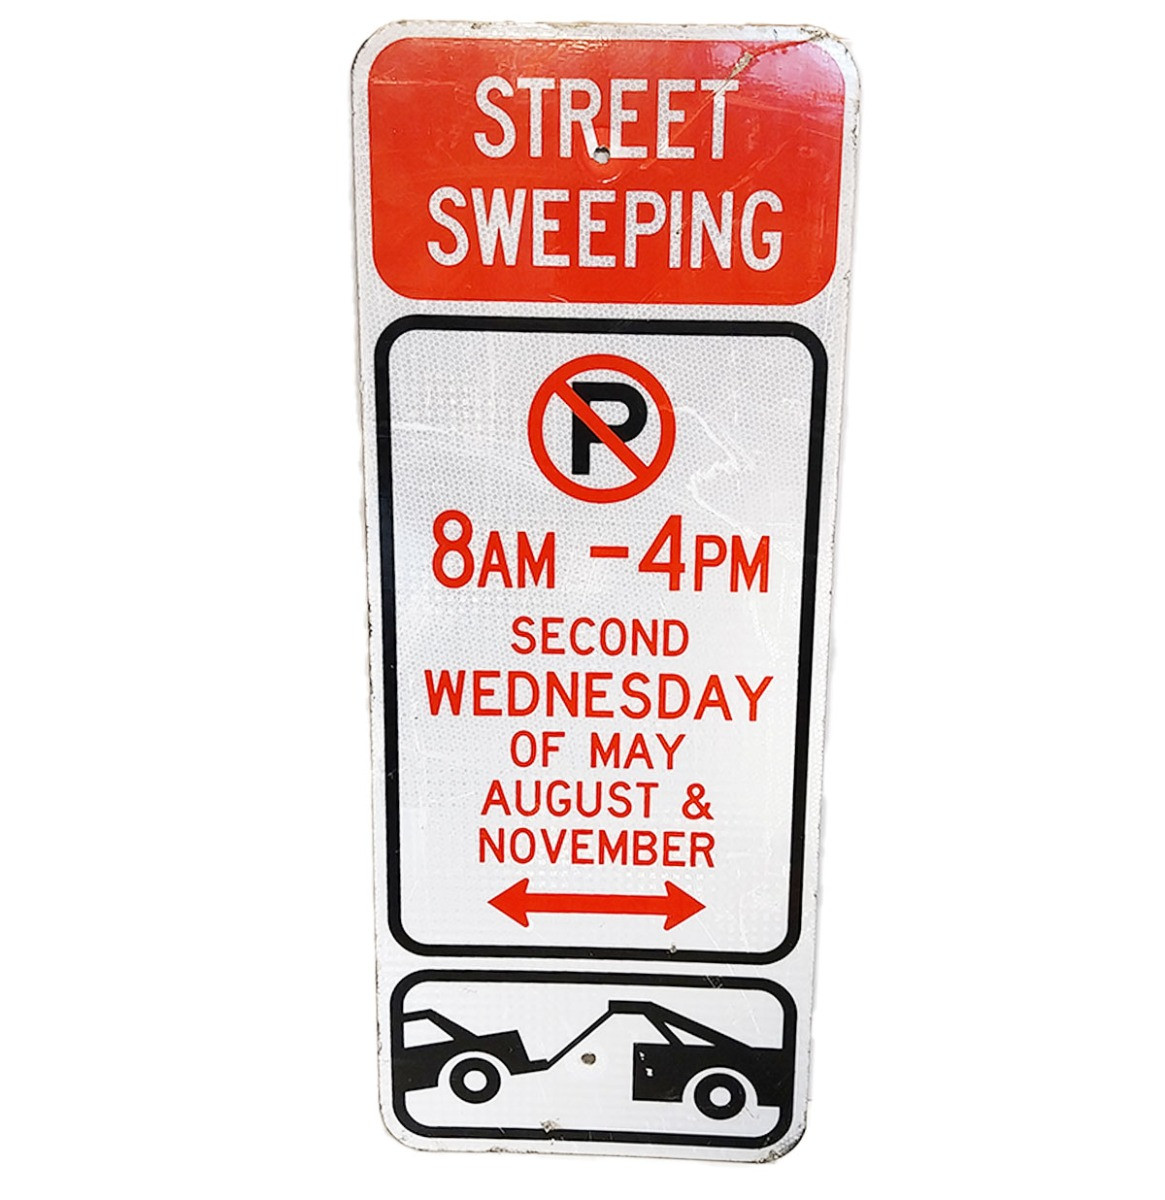 Street Sweeping Wednesdays - Original American Street Sign - 76 x 30,5cm